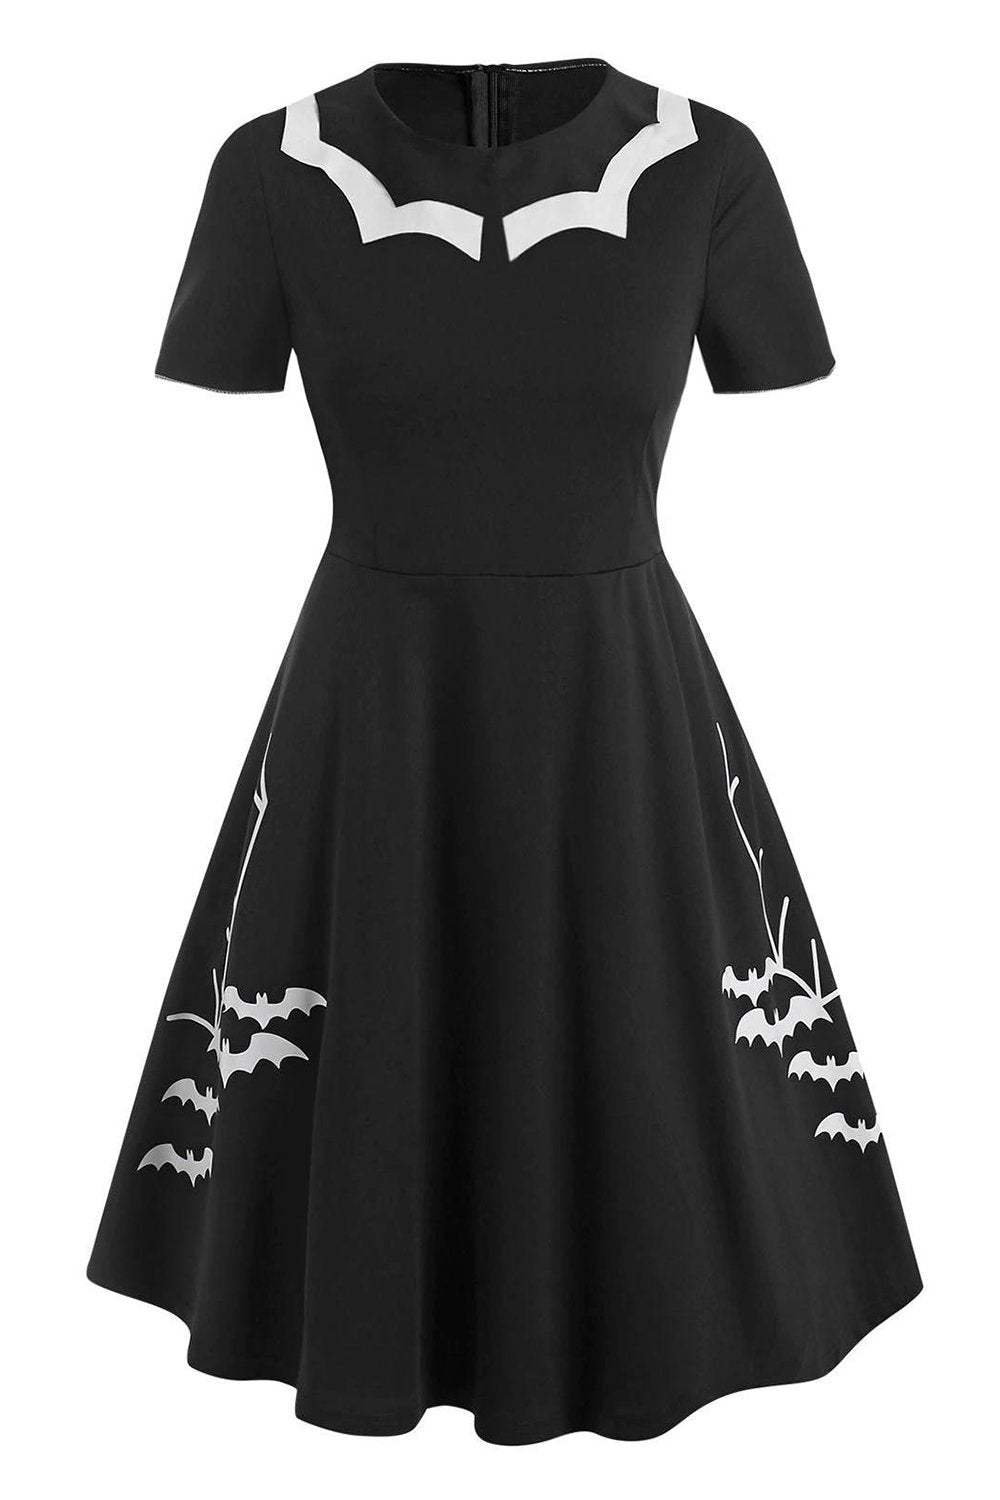 Black Bat Print Halloween Dress